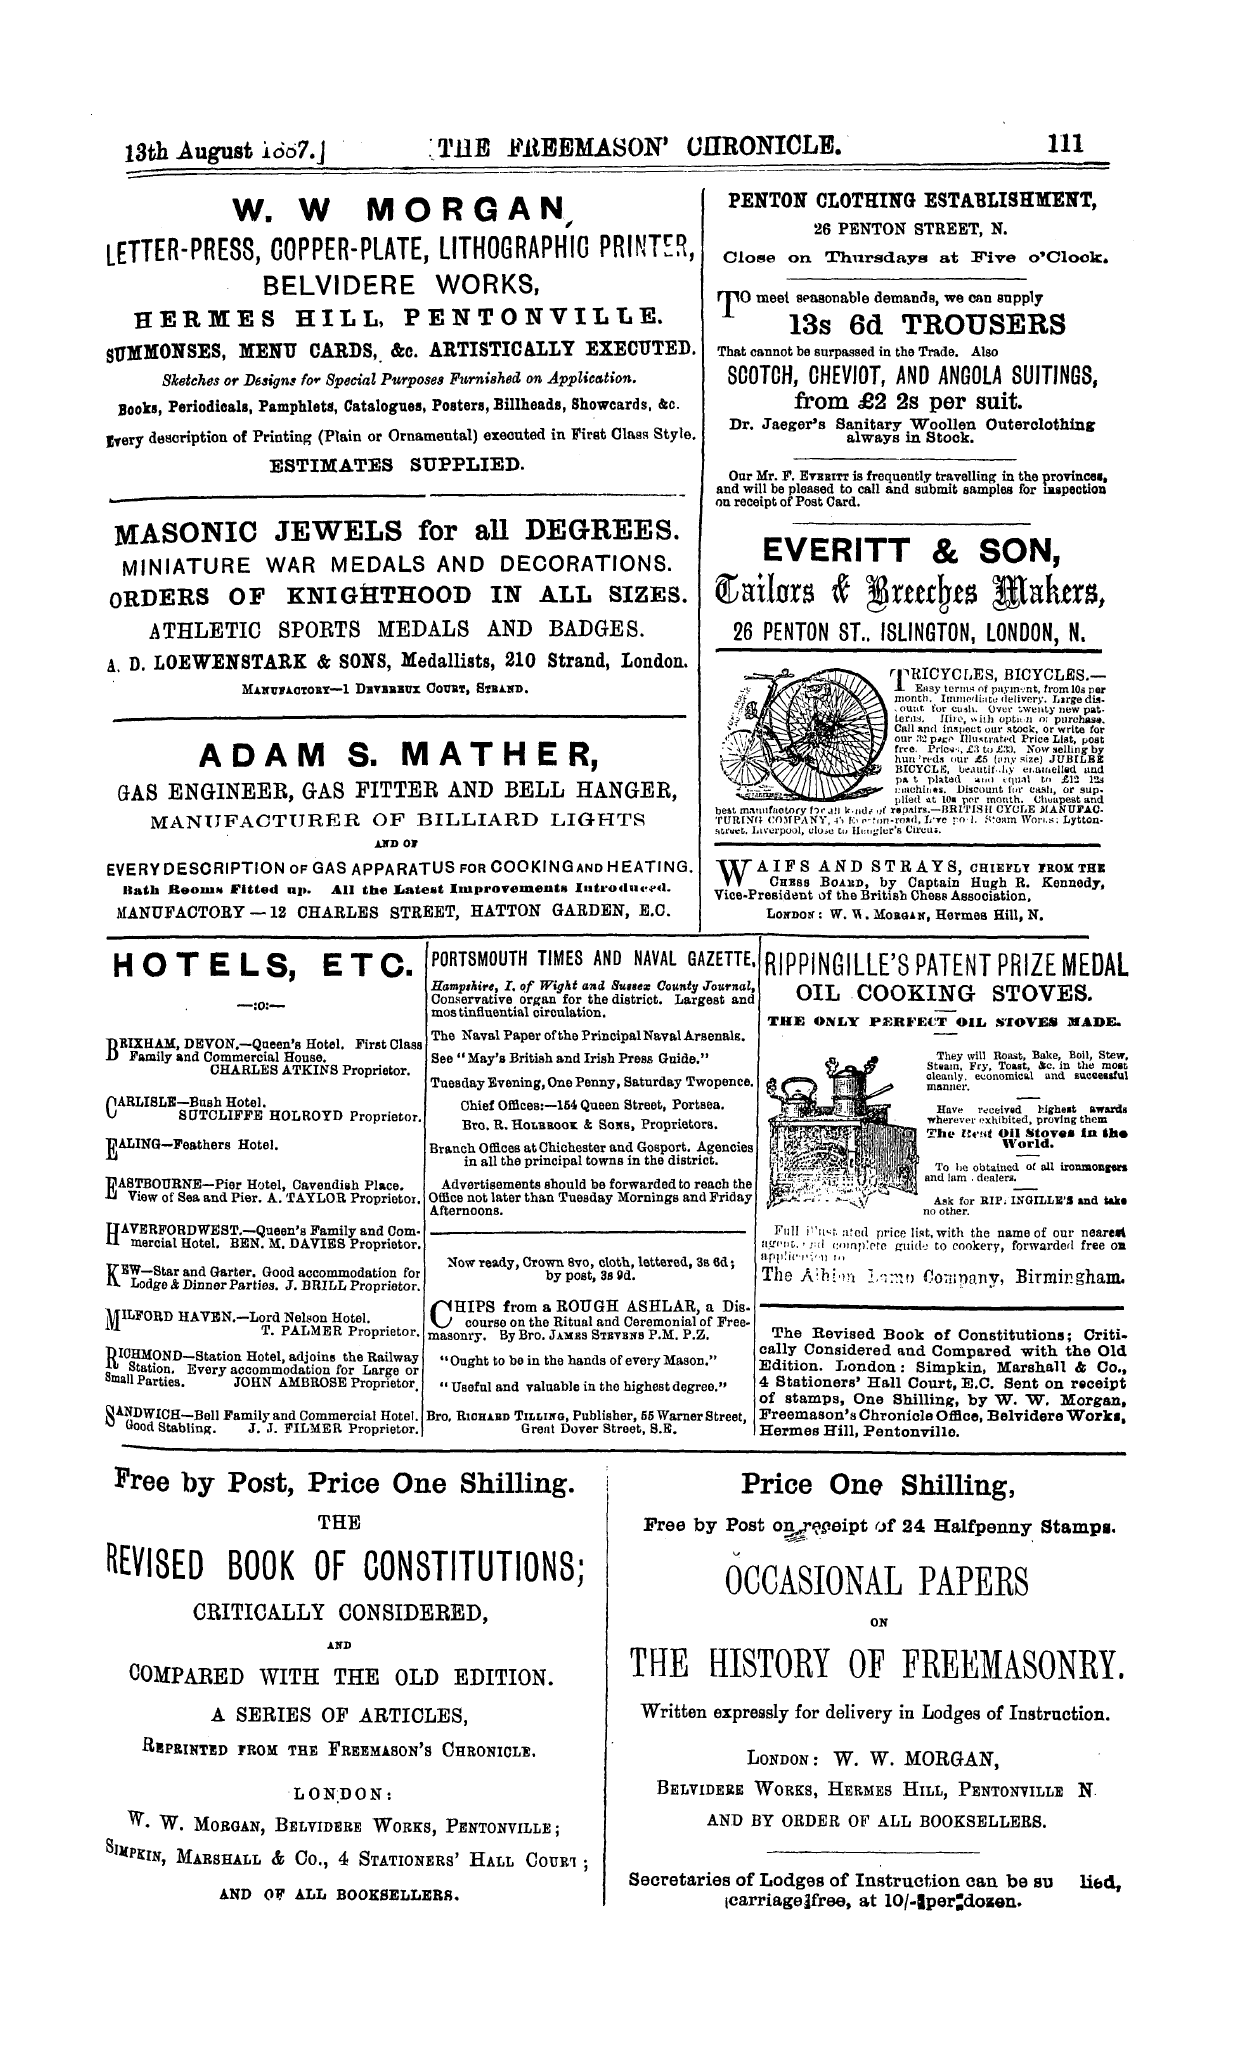 The Freemason's Chronicle: 1887-08-13 - Ad01507